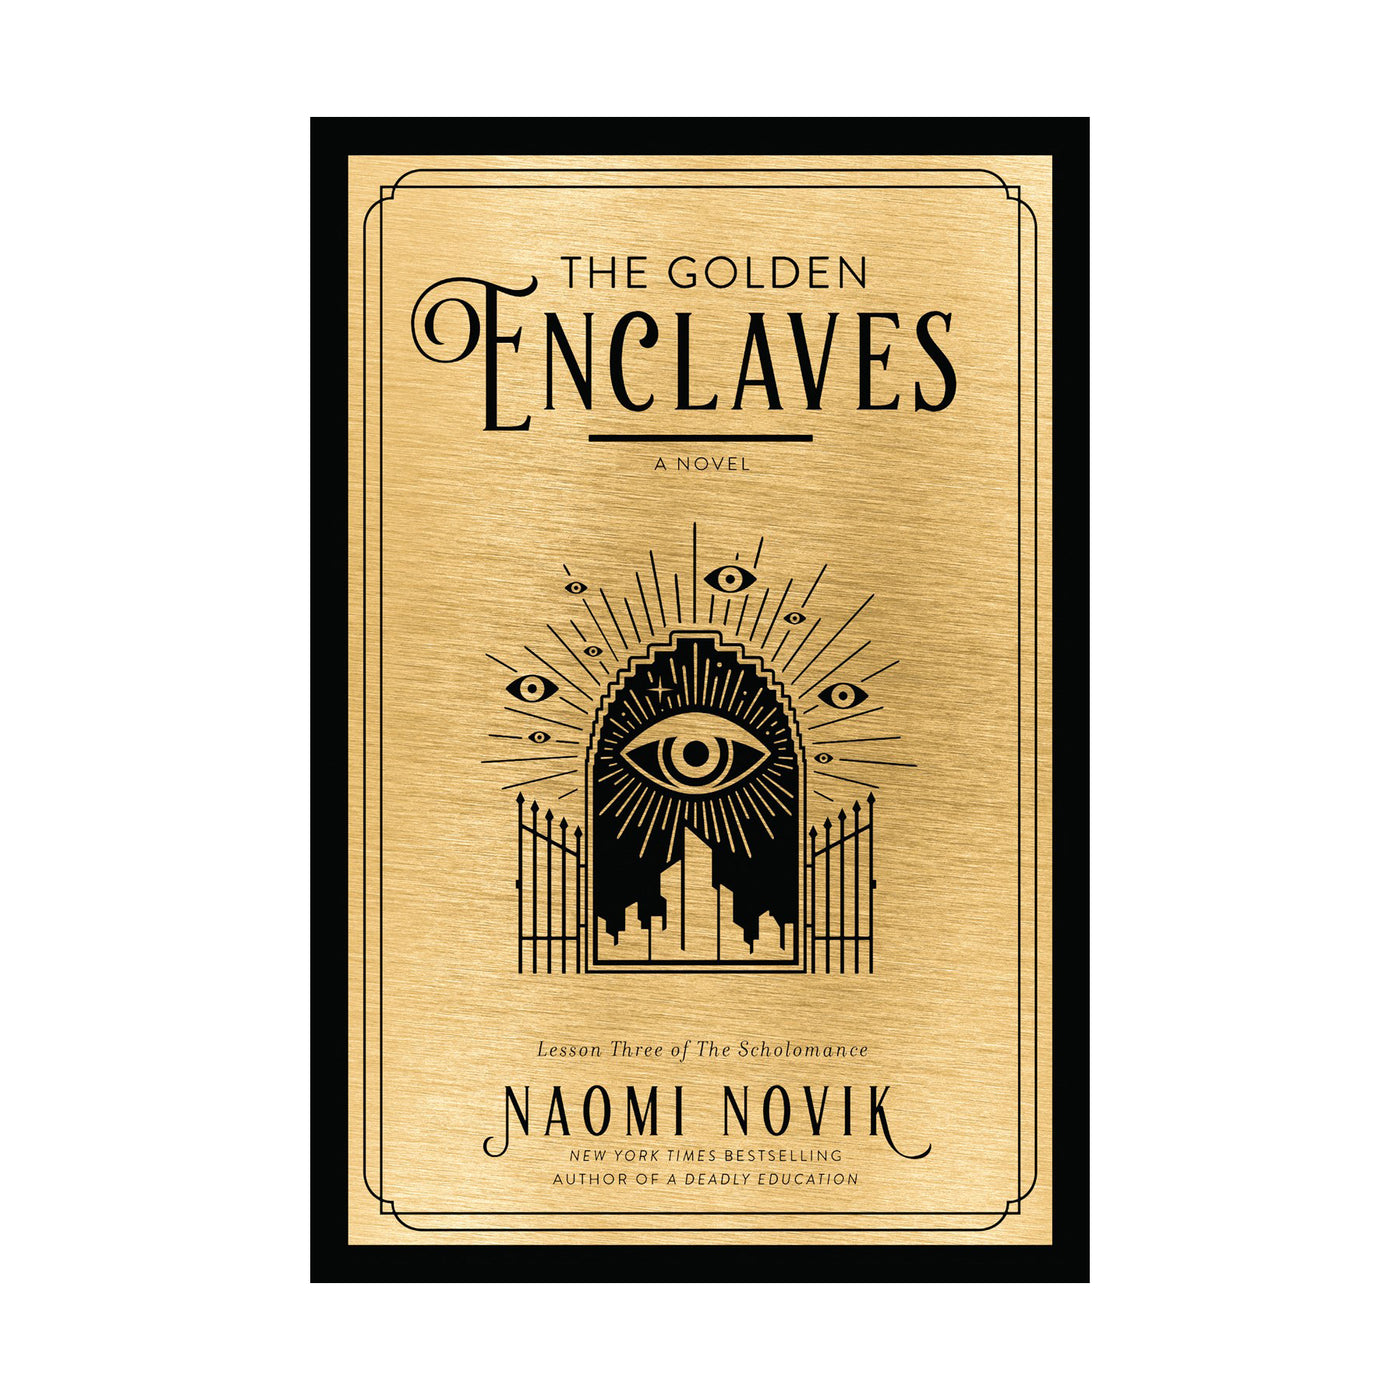  Naomi Novik: books, biography, latest update